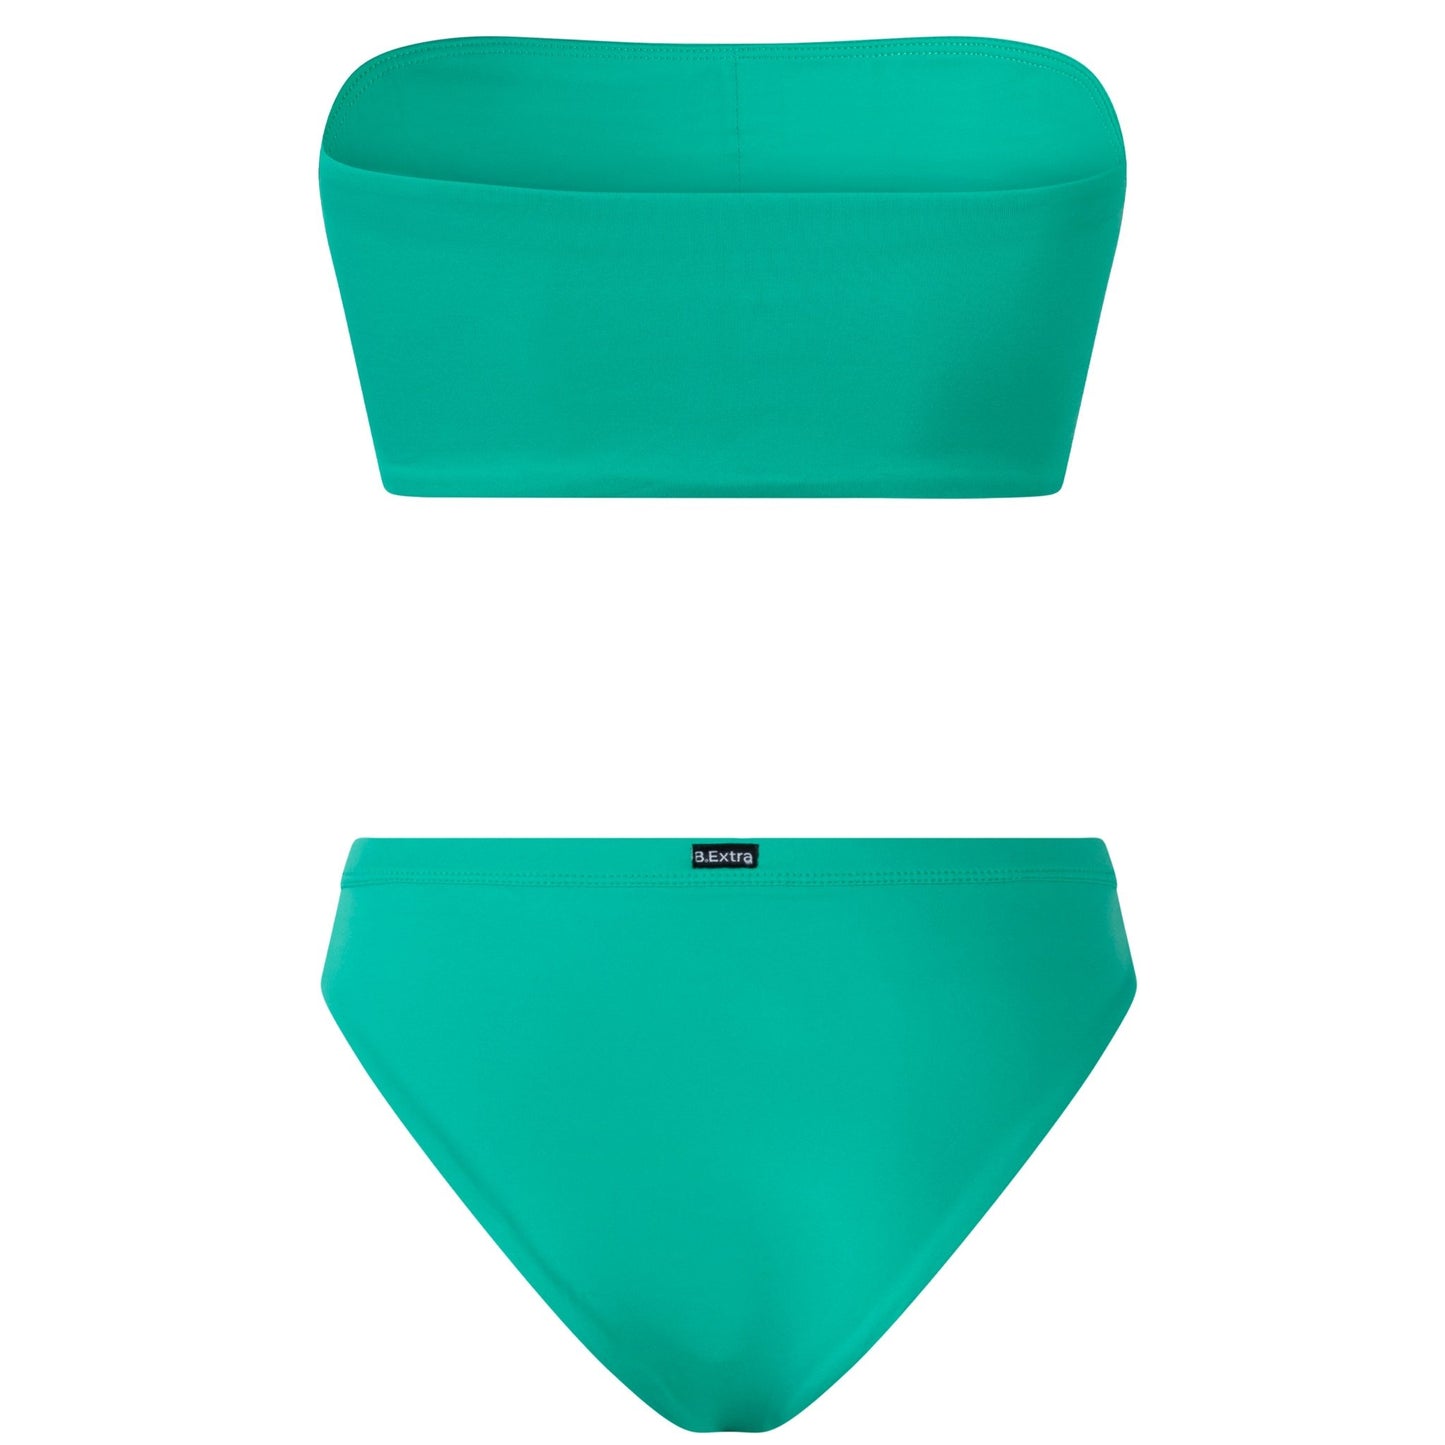 Bandeau full bikini - Vivid Green